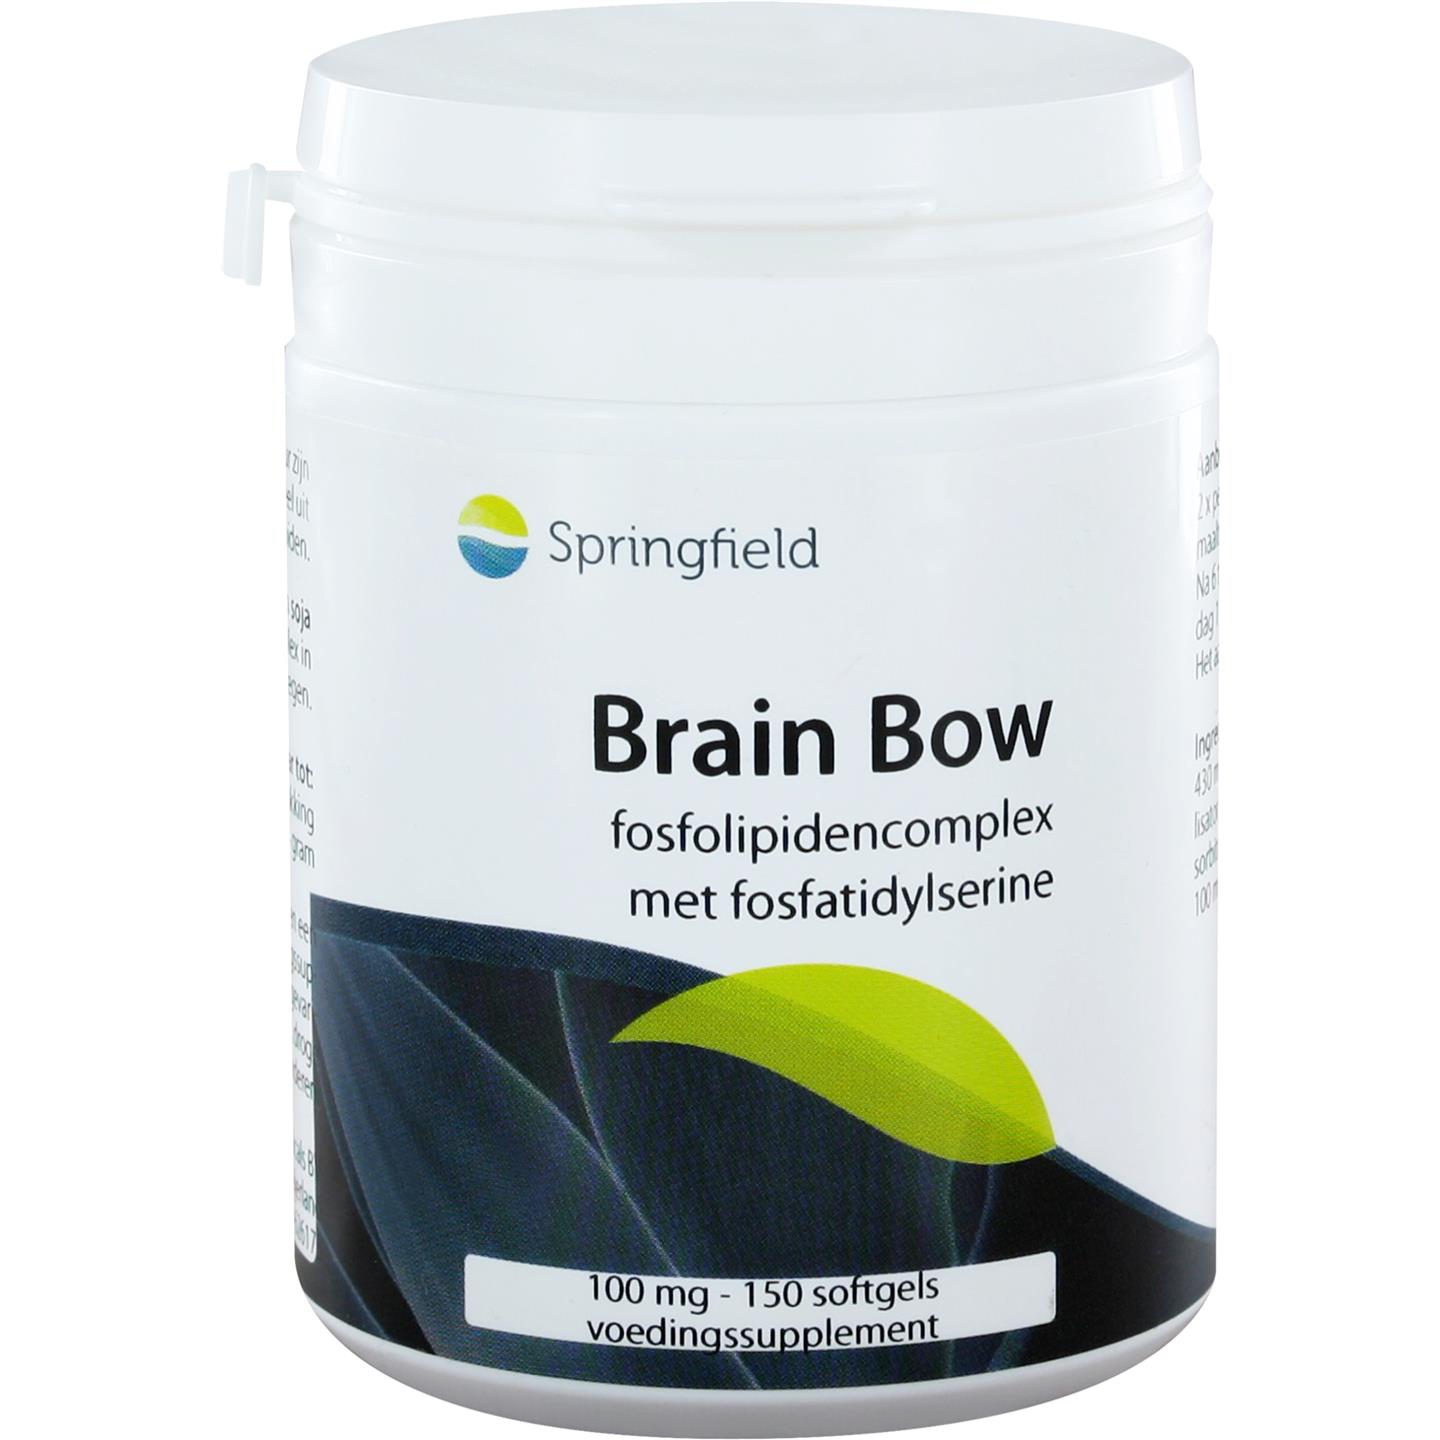 Brain Bow